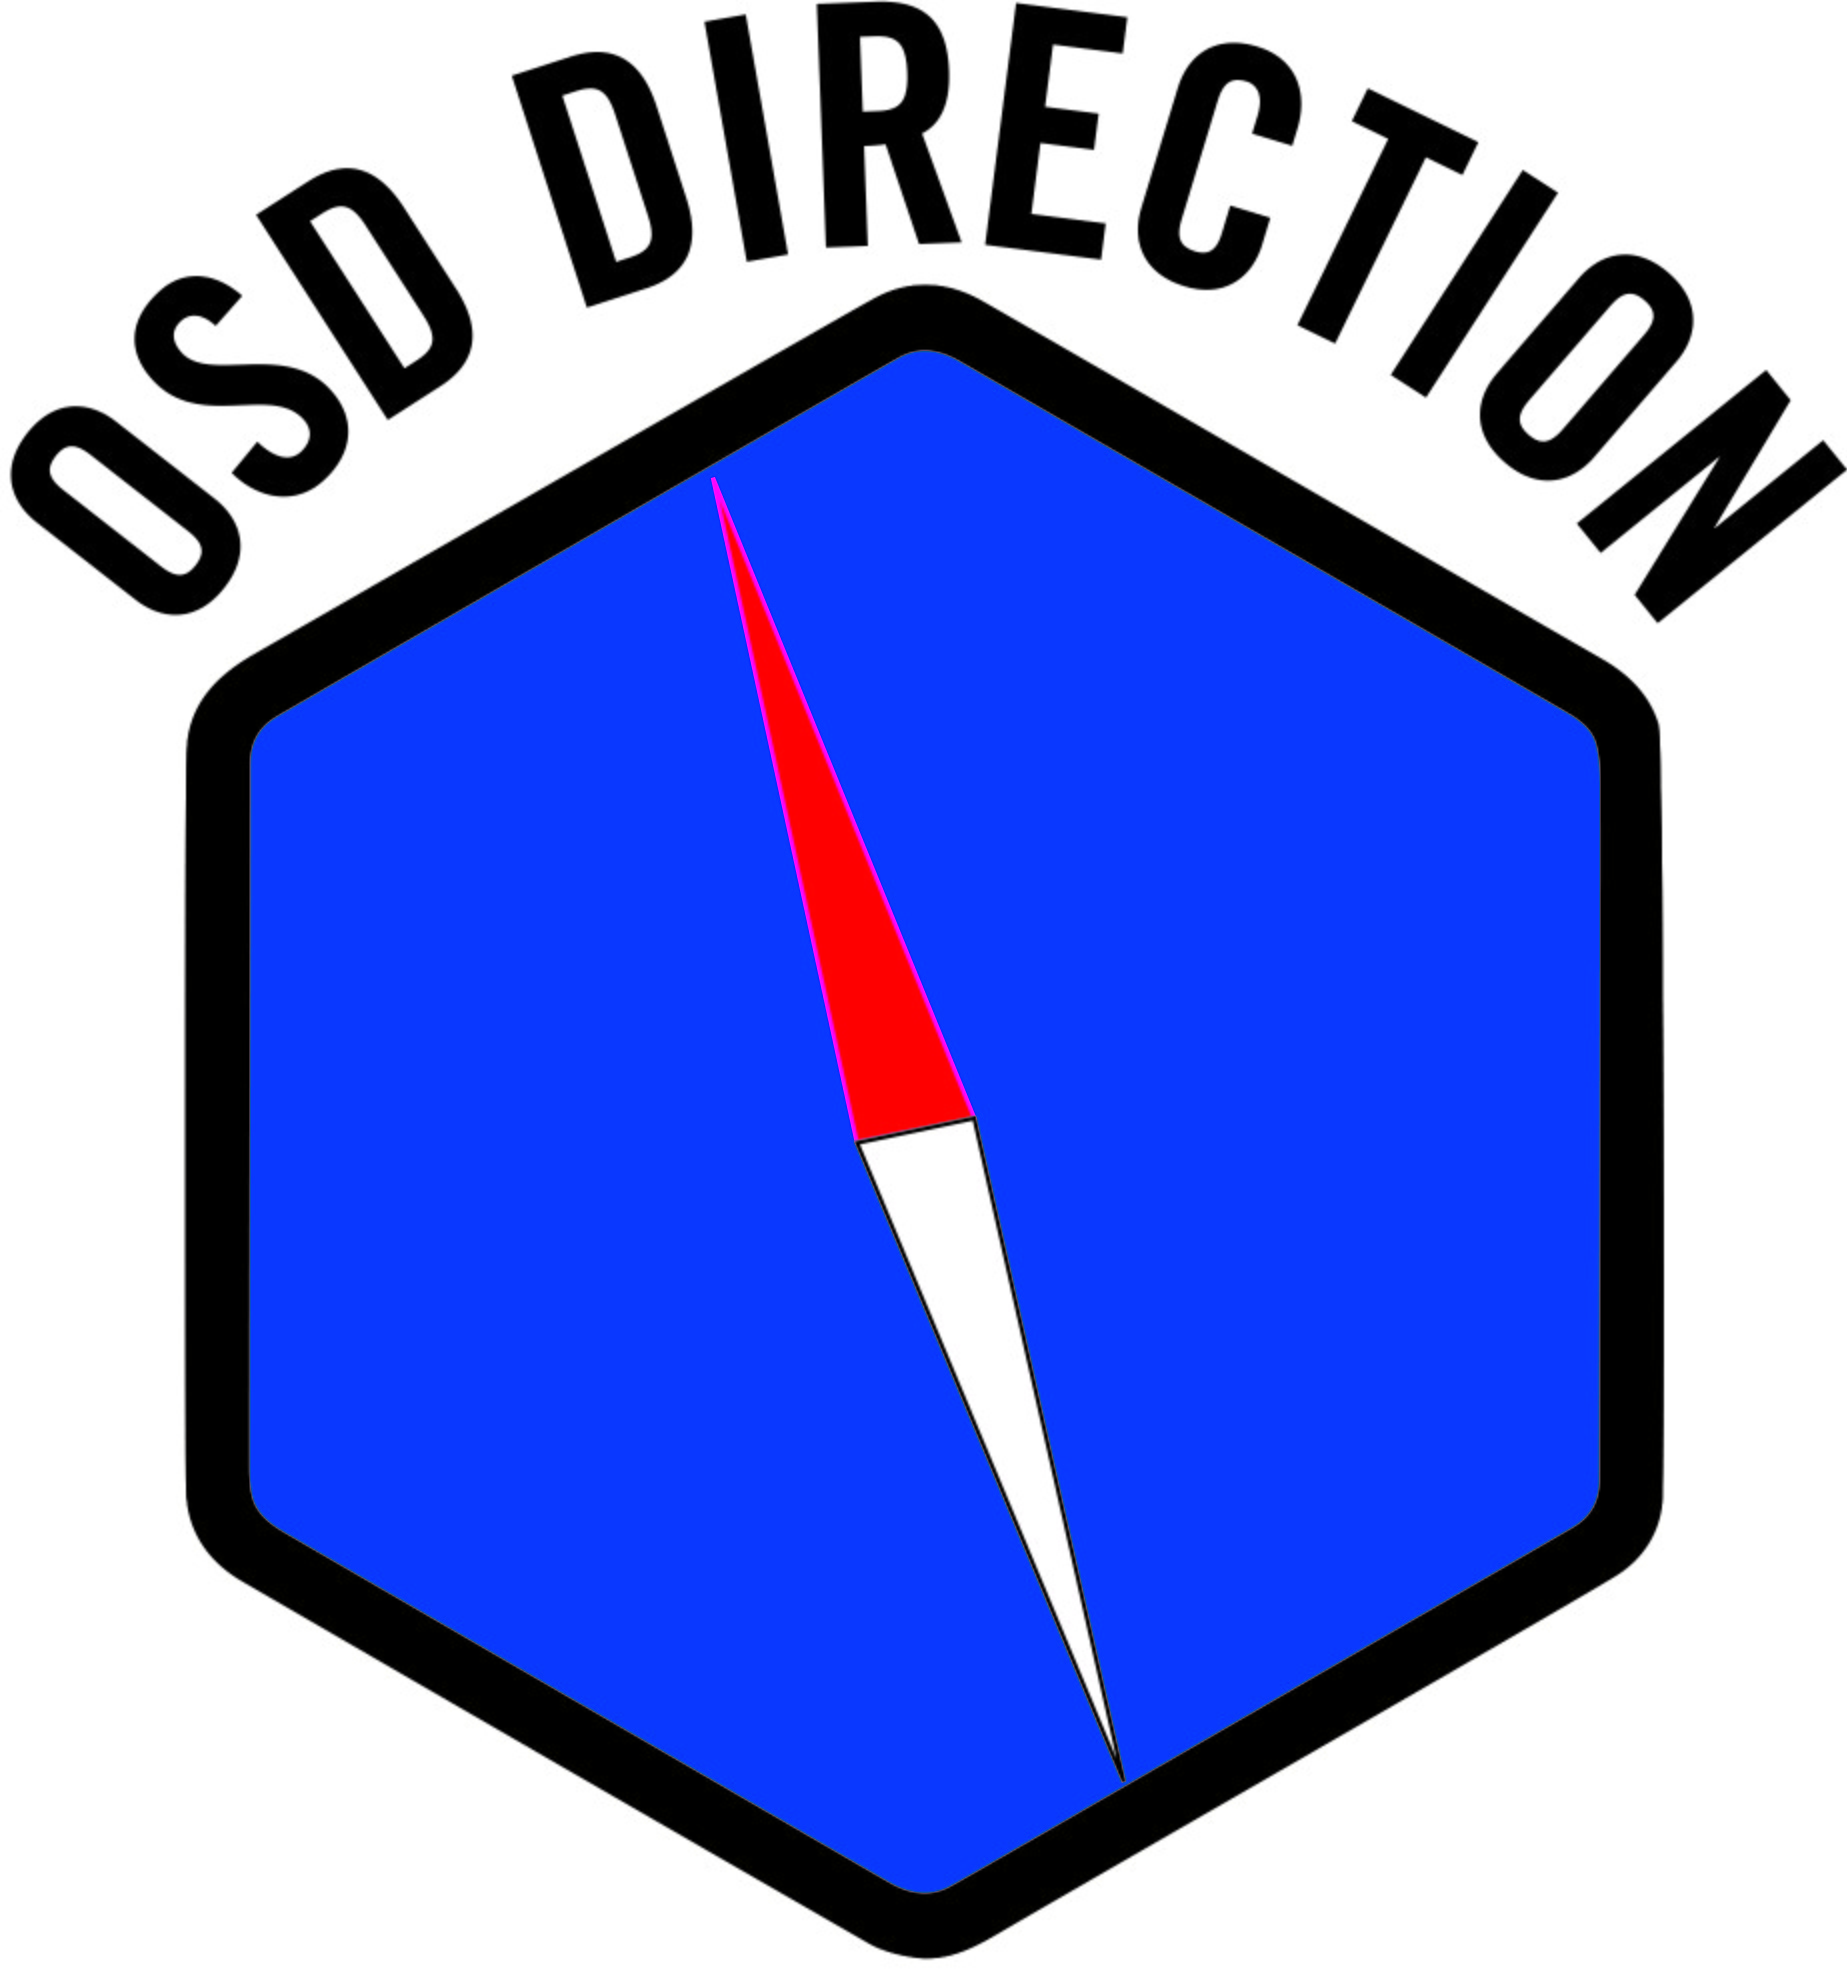 OSD Direction